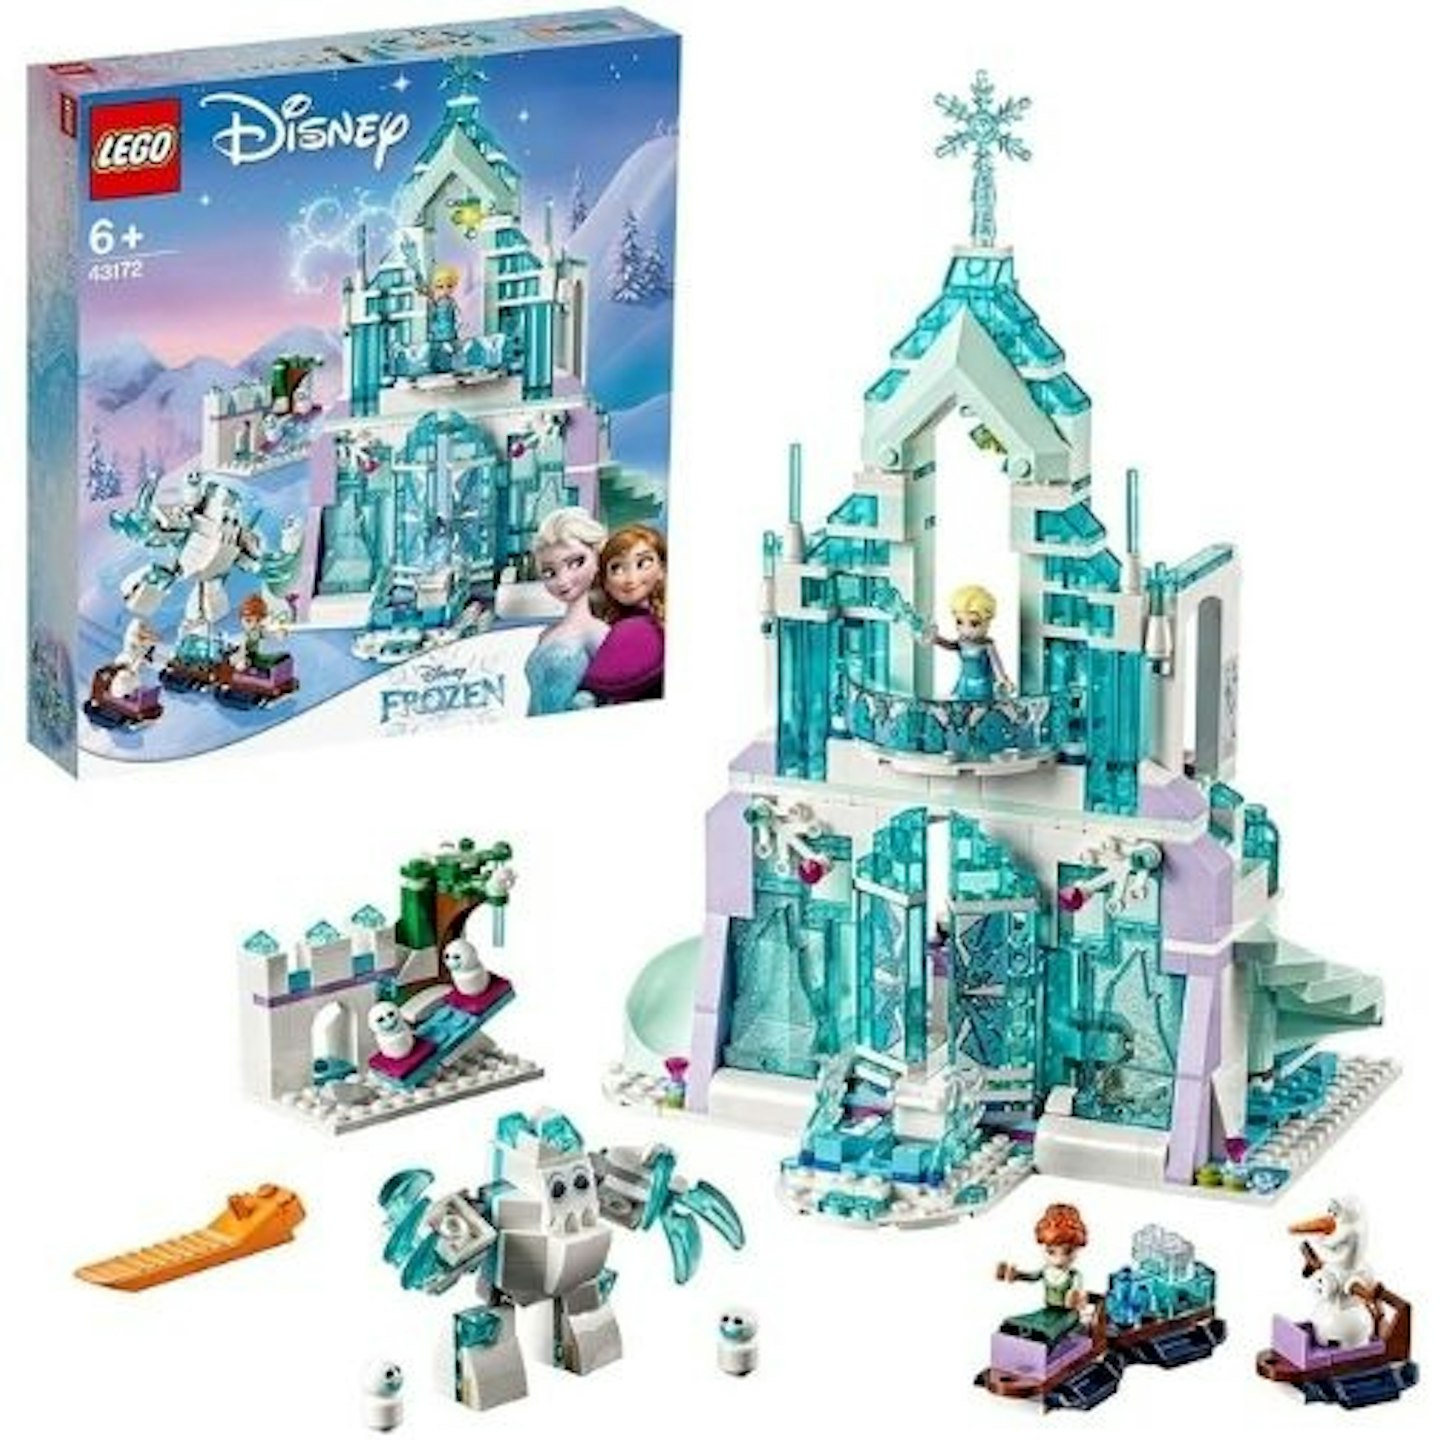 LEGO Disney Princess Frozen Elsa’s Magical Ice Palace